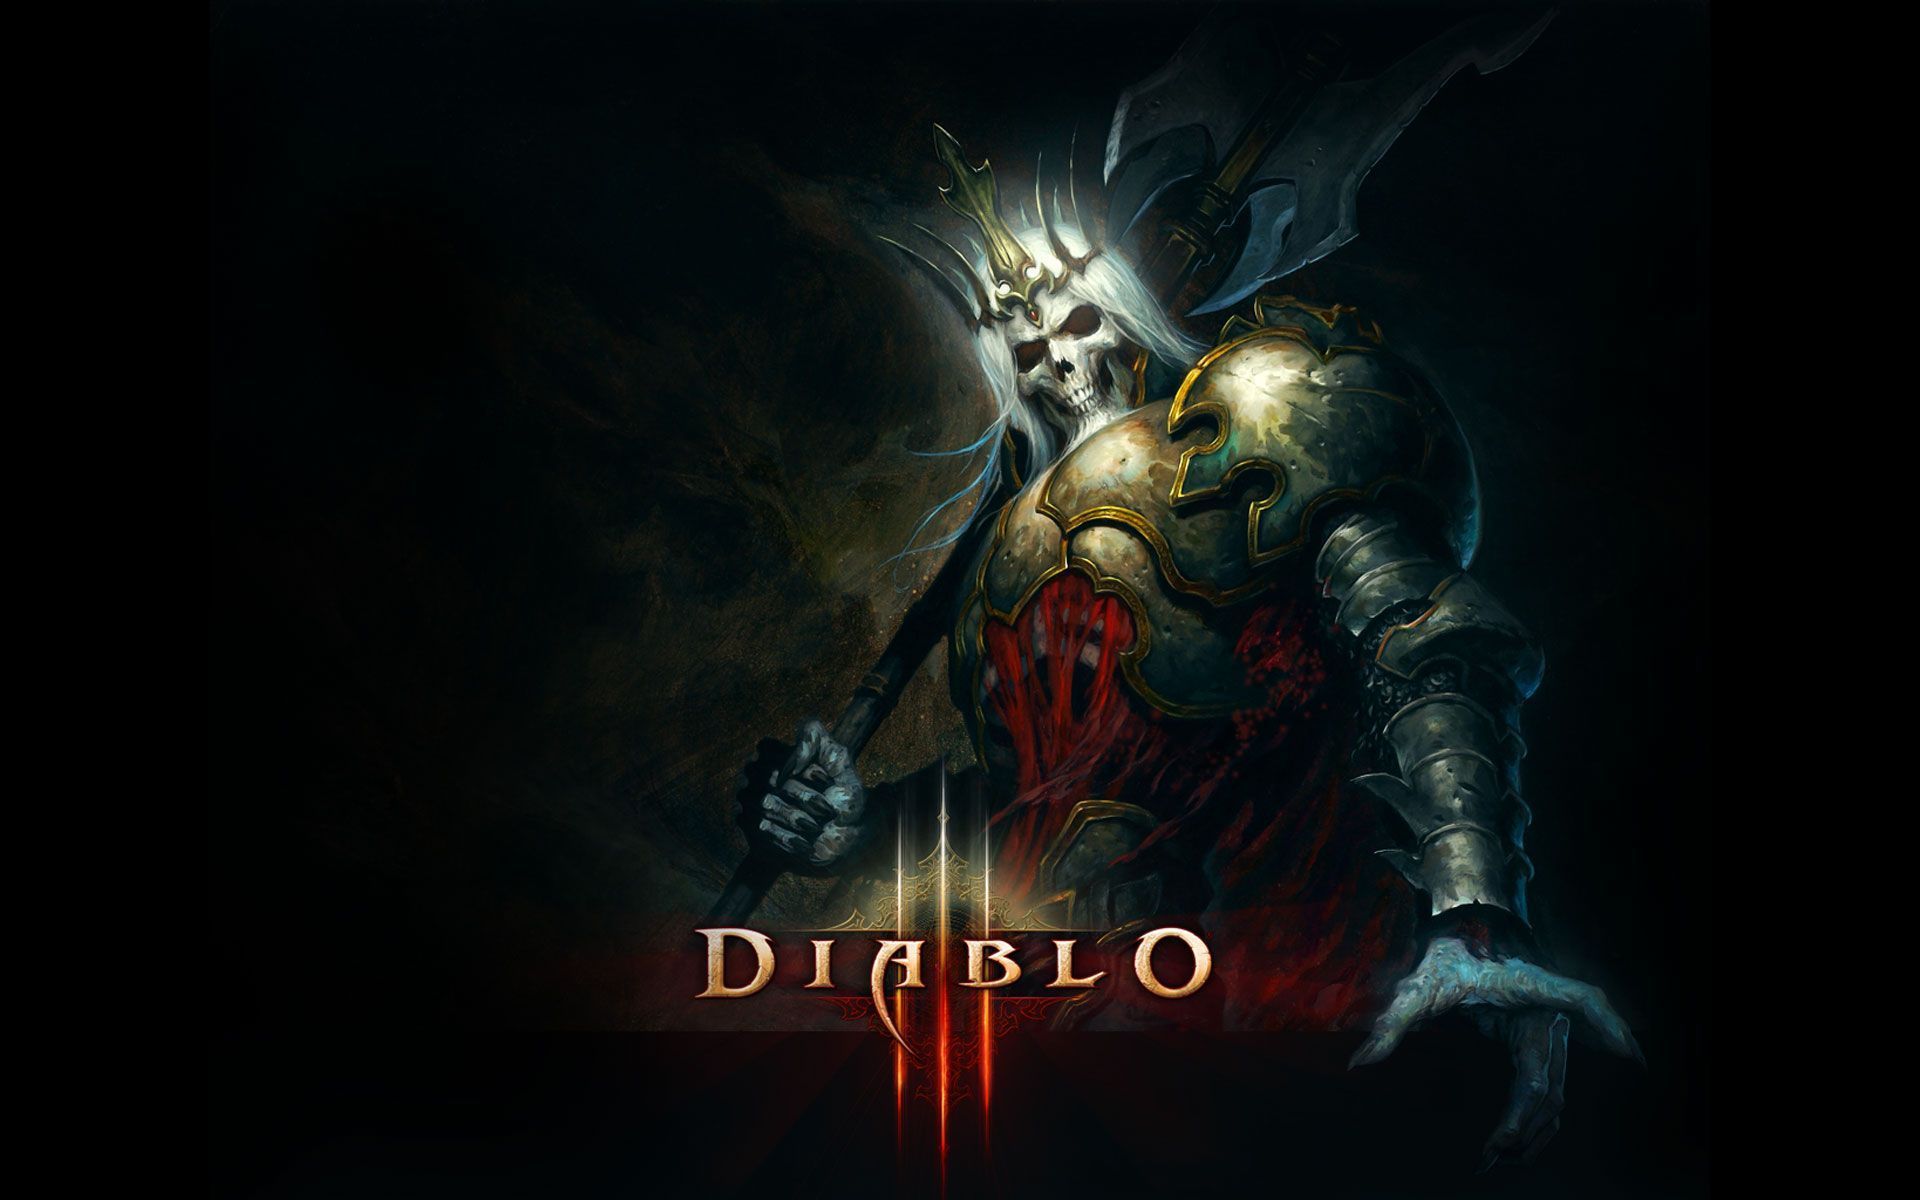 Diablo 3 Awesome Images Wallpaper yfo - BeliCoin Wallpaper Blog